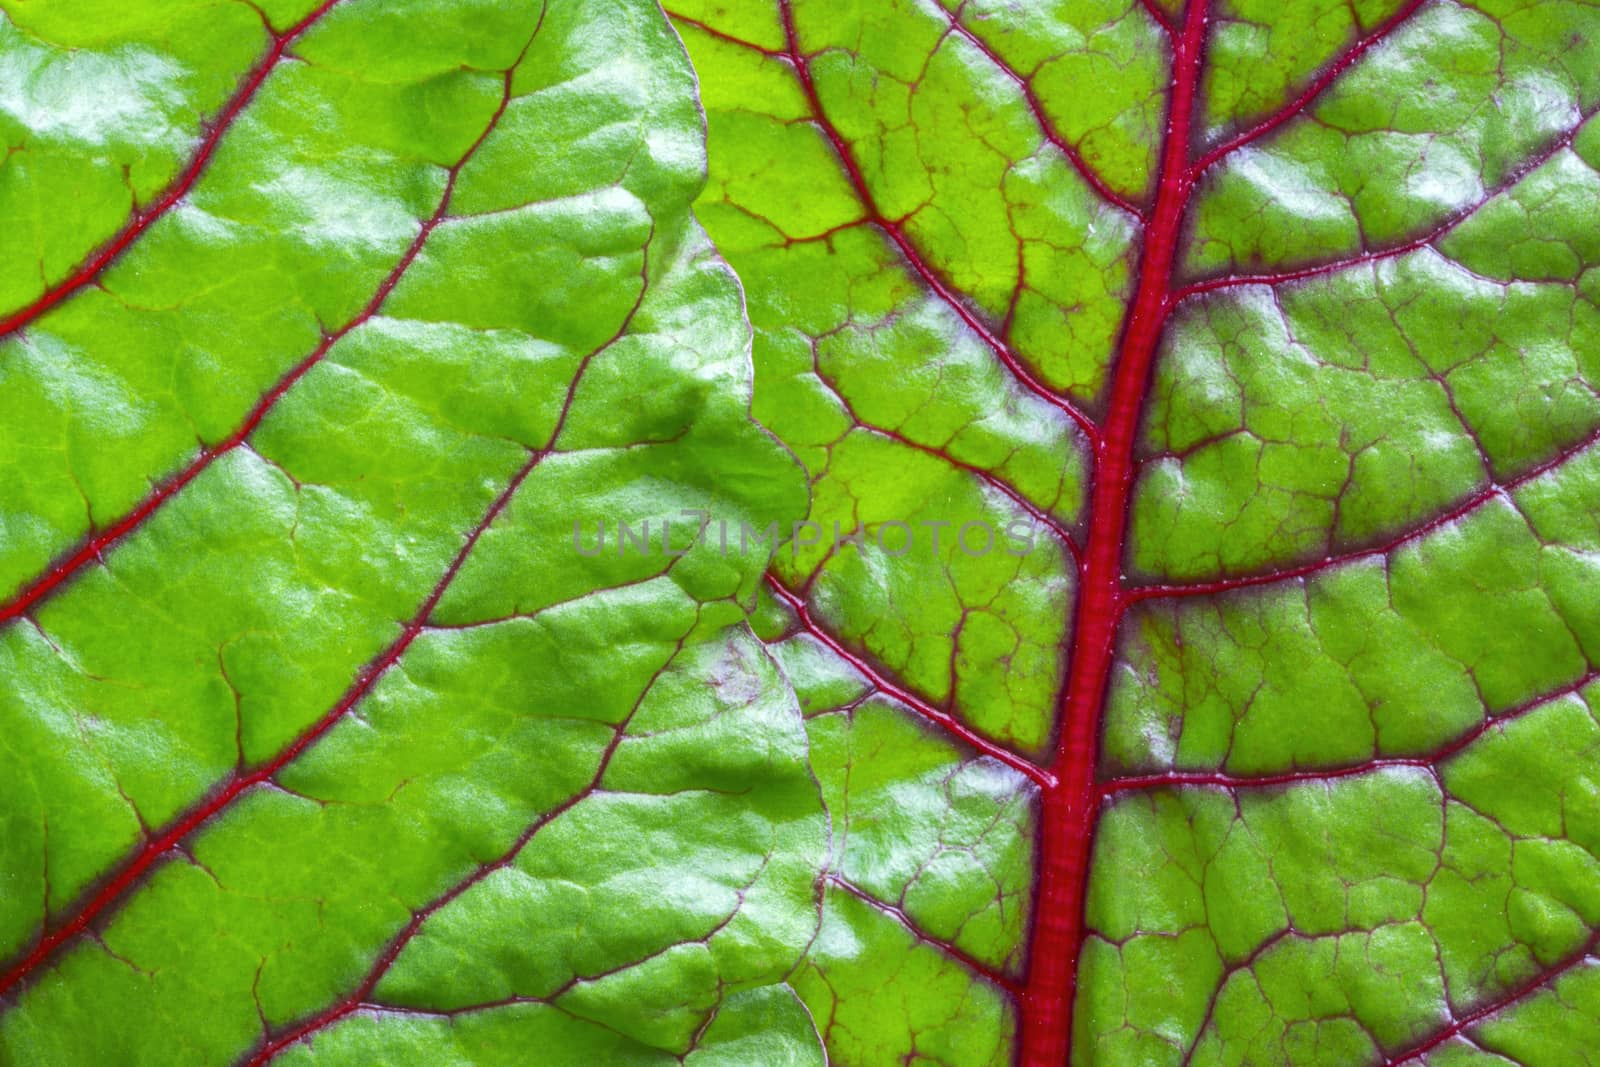 Macro closeup shiny green leaves and red veins of fresh grown Swiss chard